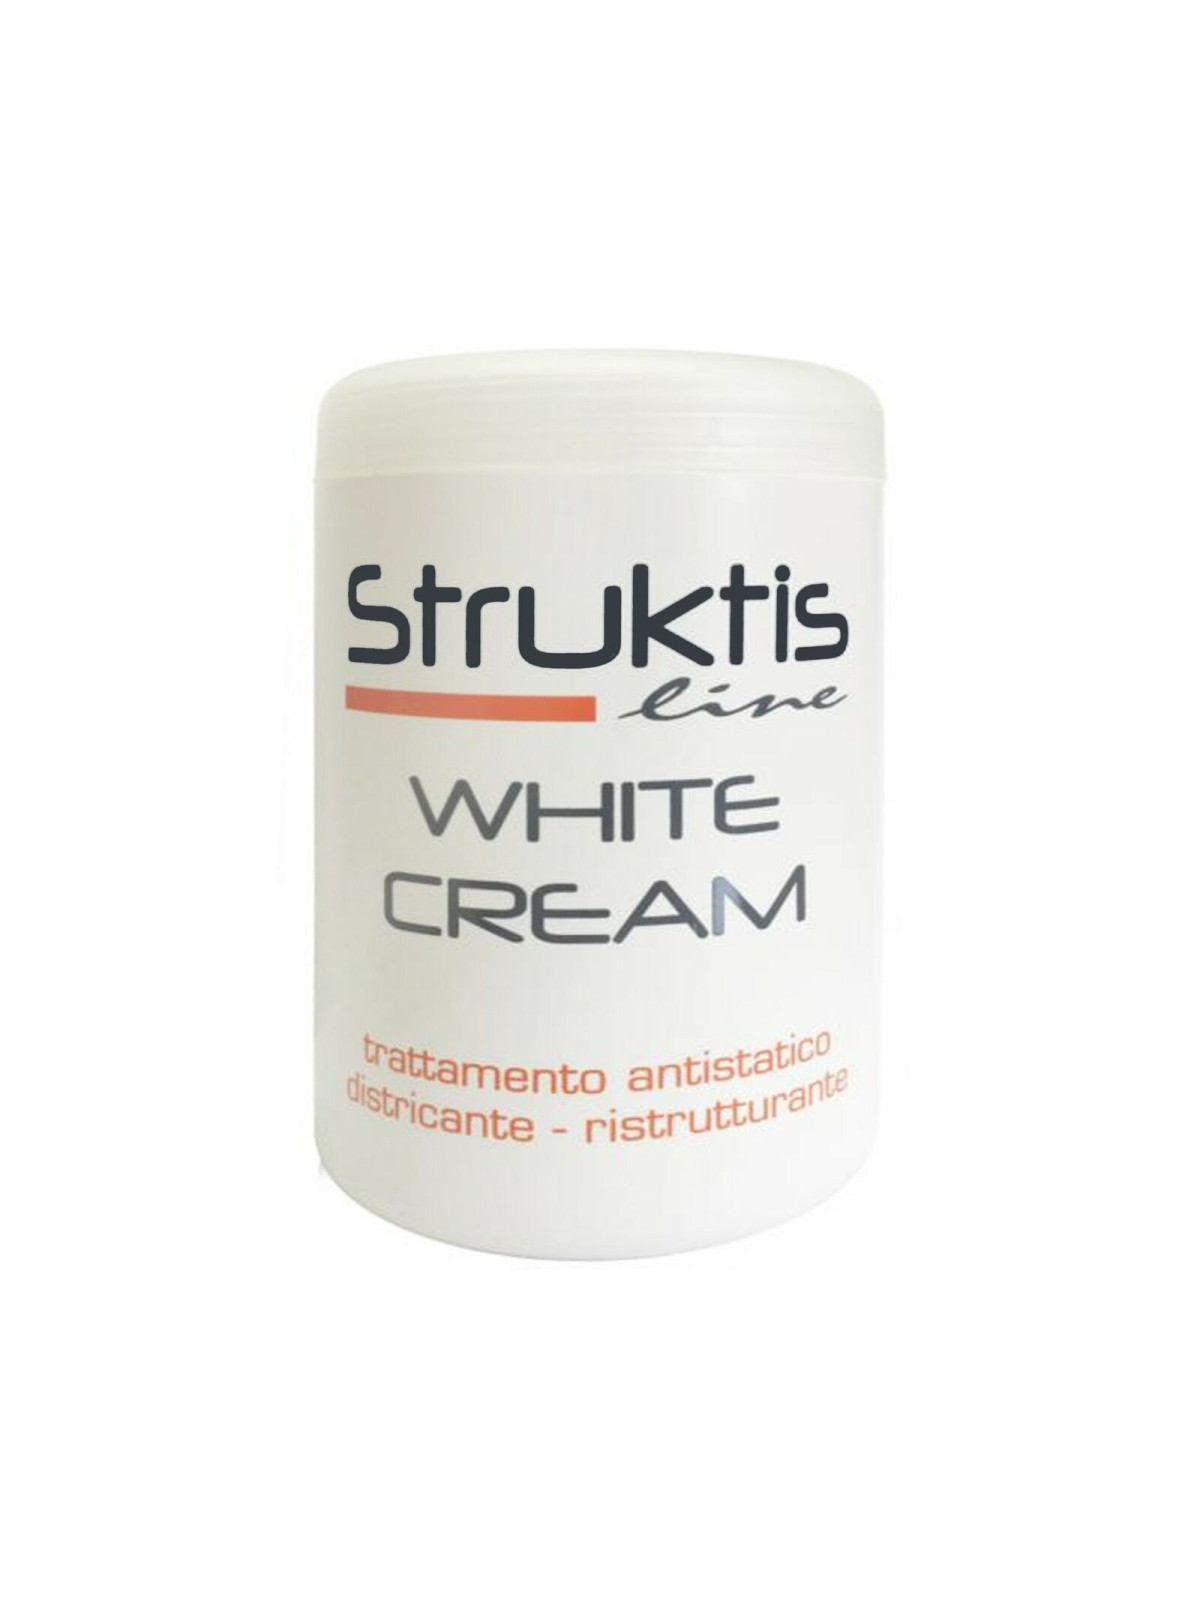 Struktis White cream maschera ristrutturante 1000 ml 3,30 € -70%